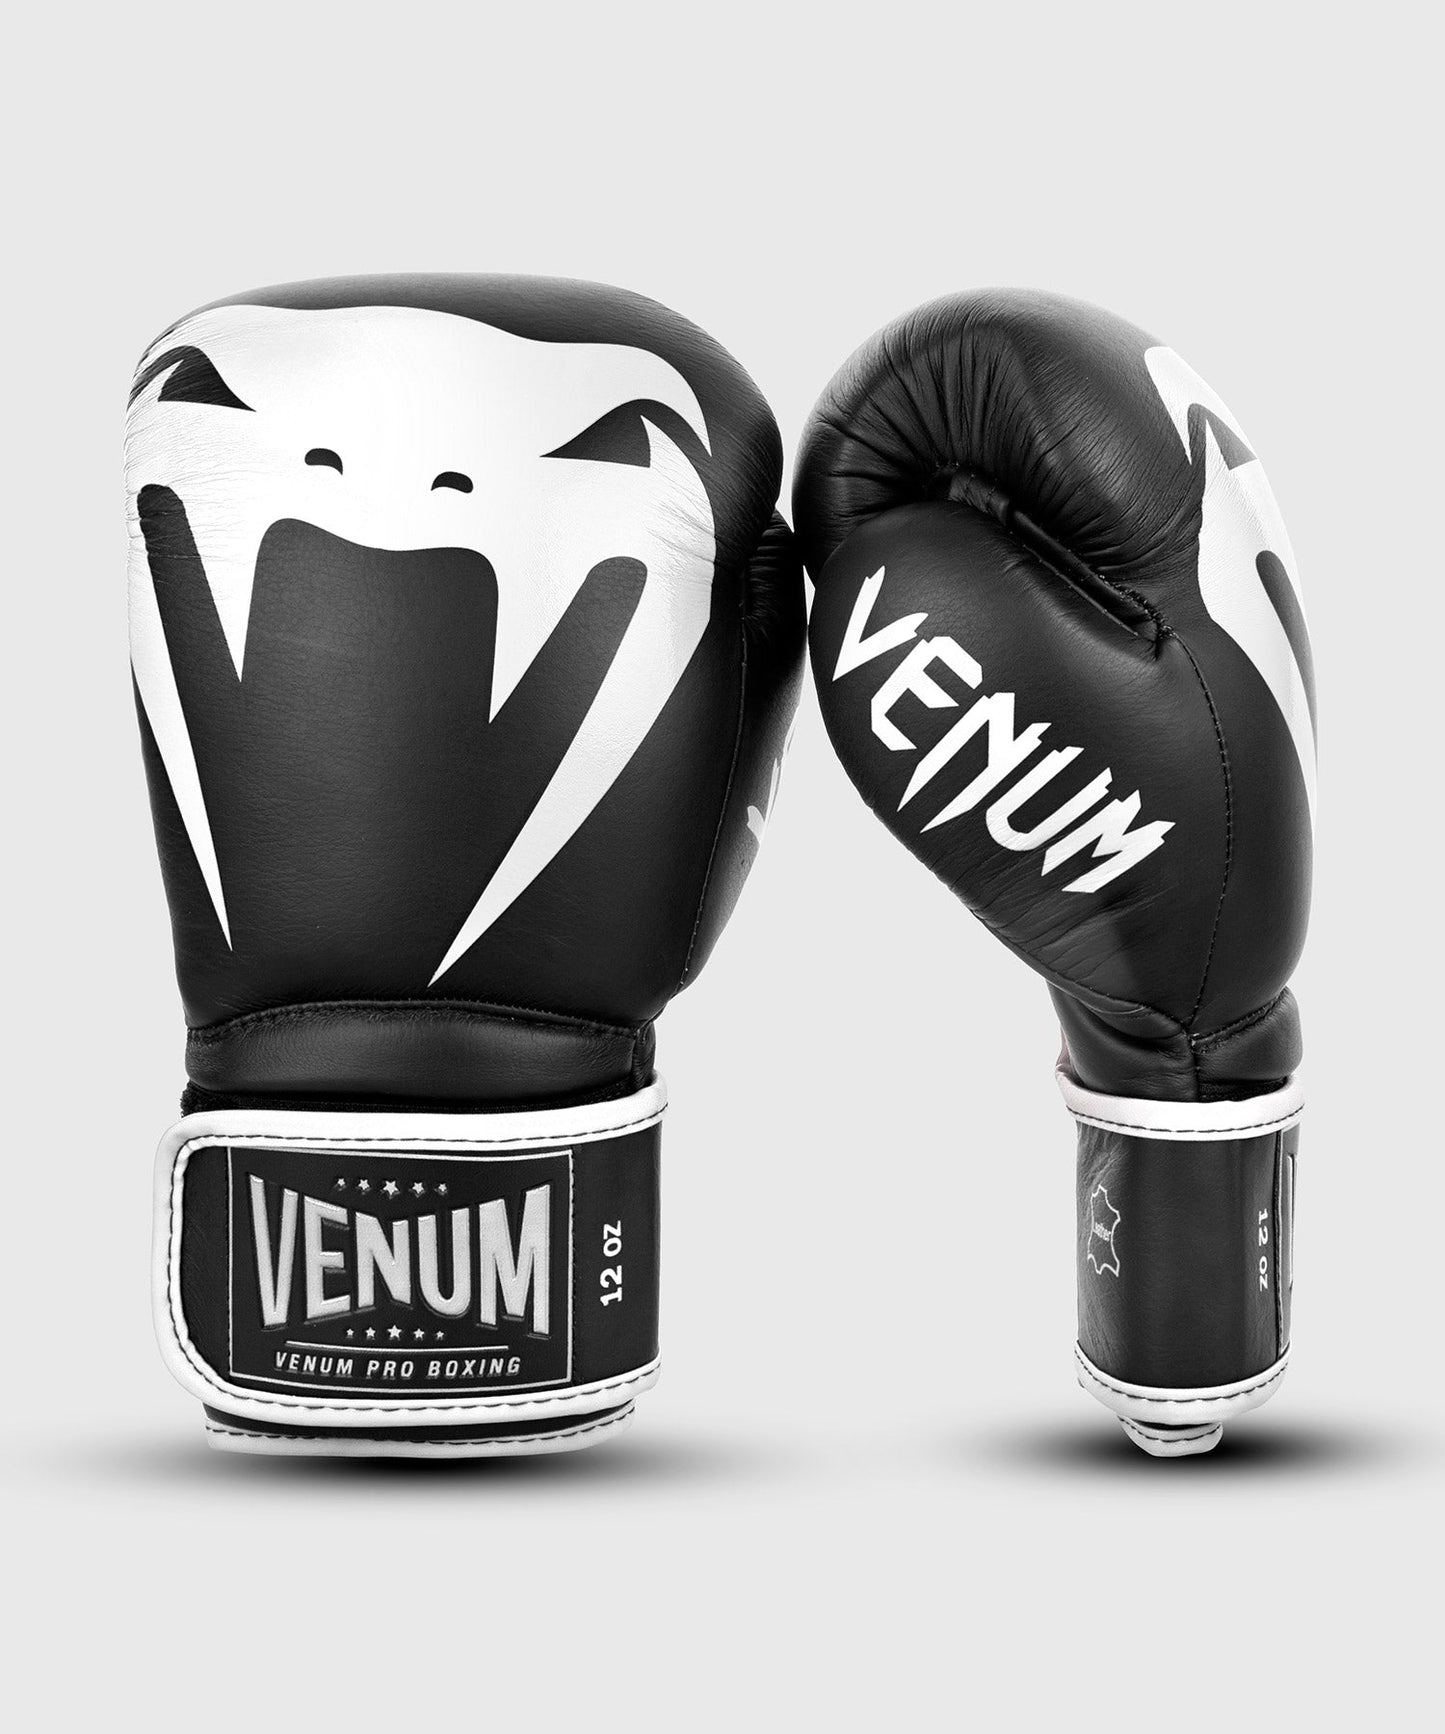 Venum Giant 2.0 professionelle Boxhandschuhe - Klettverschluss